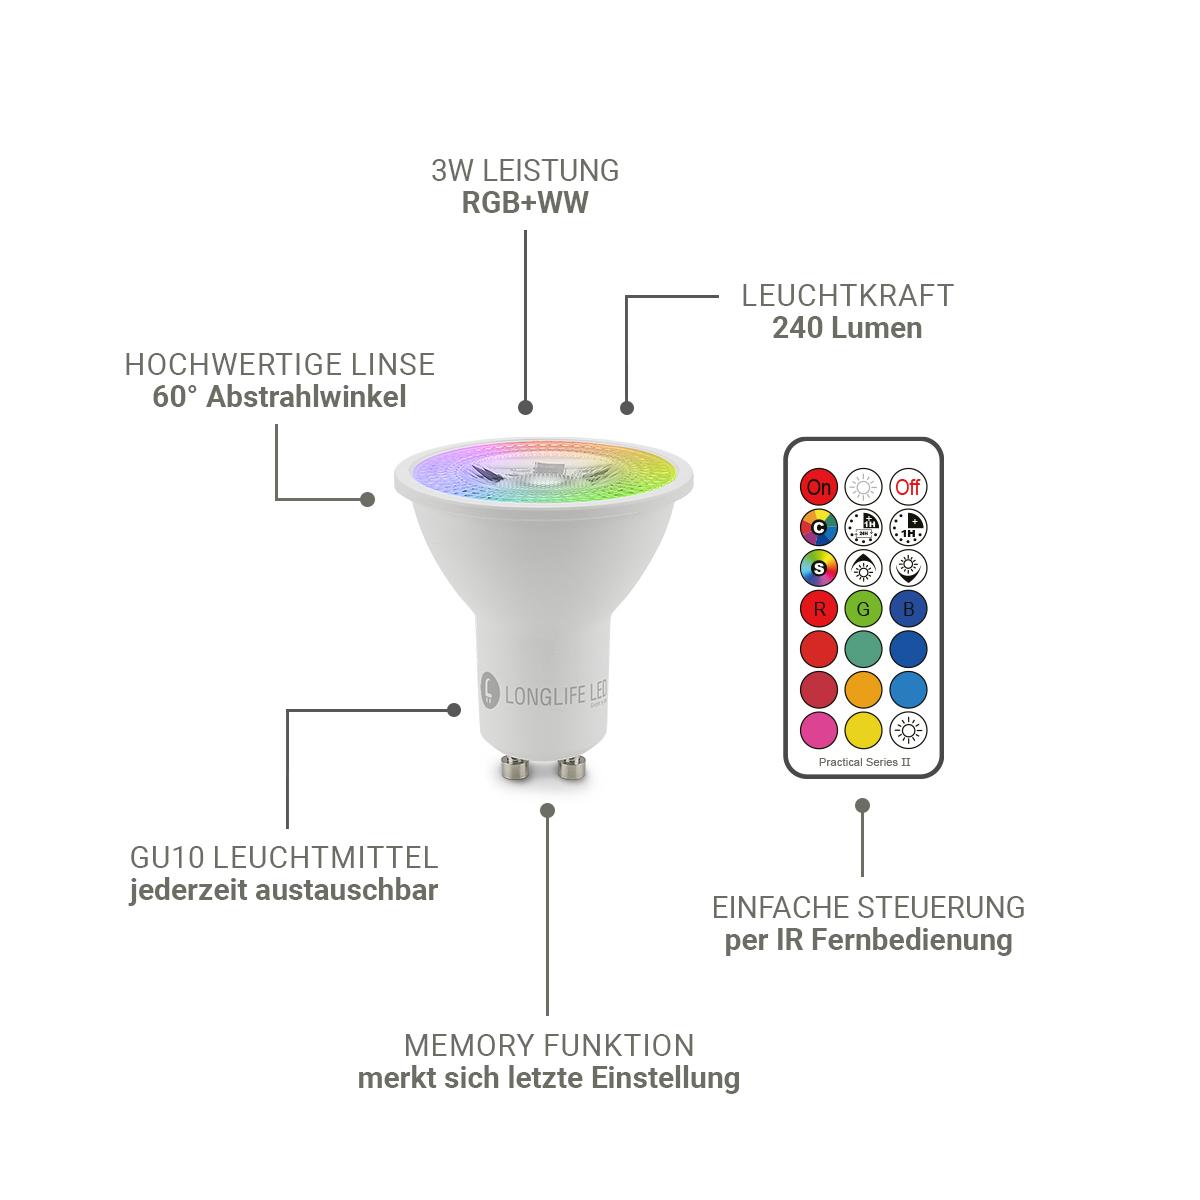 LED Bodeneinbaustrahler eckig Edelstahl 230V IP67 - Leuchtmittel: GU10 3W RGBW ink. IR Fernbedienung - Anzahl: 3x